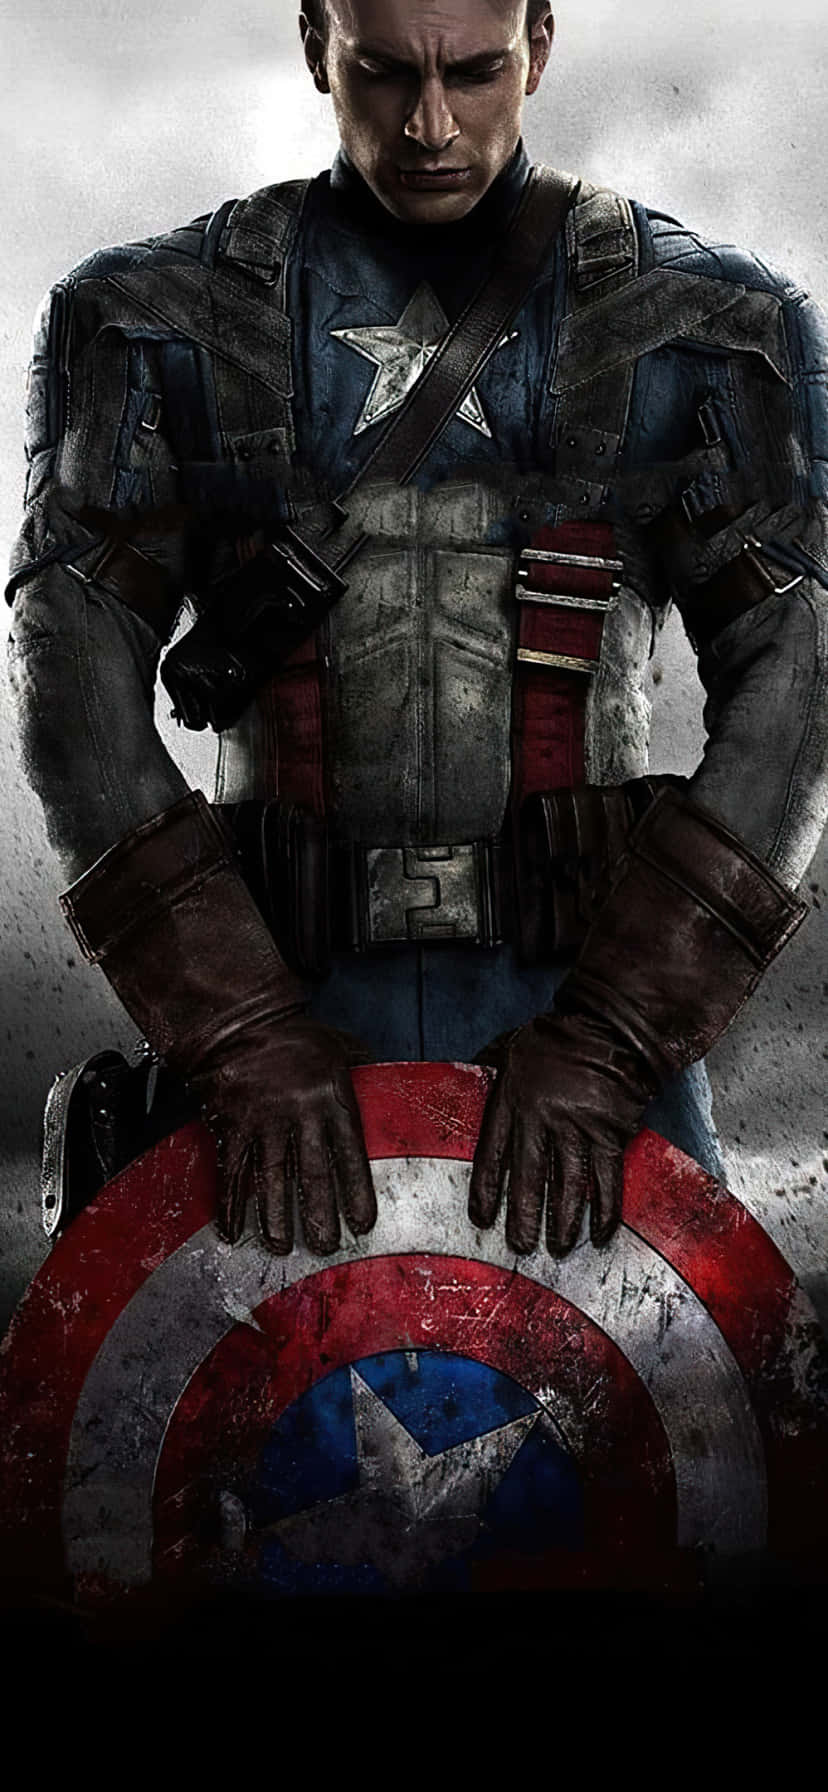 Captain America The First Avenger Background